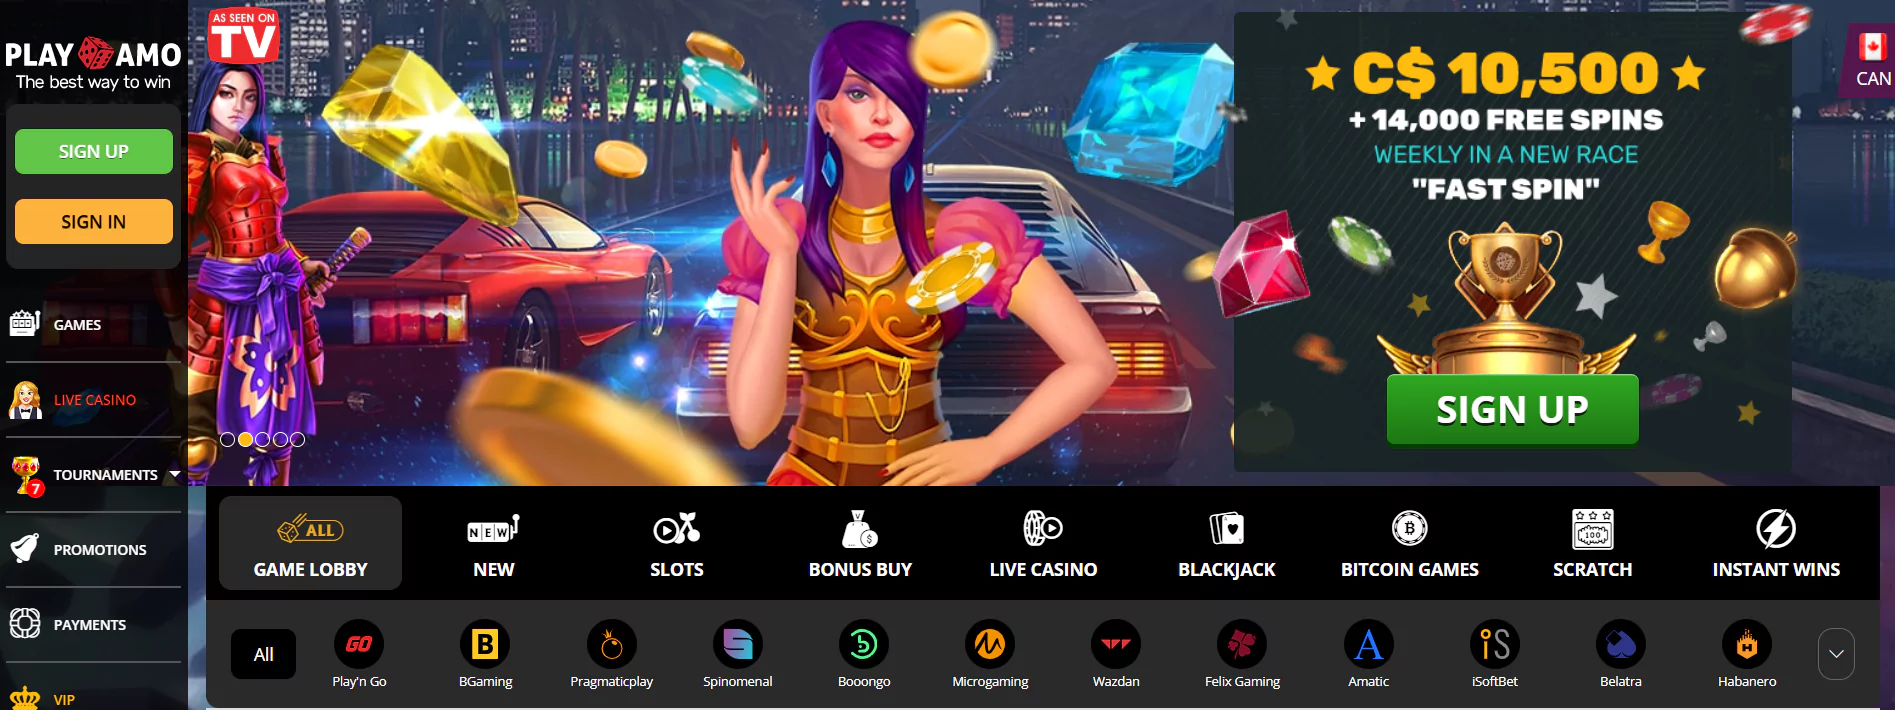 Screenshot of Play Amo - Real Money Online Casino